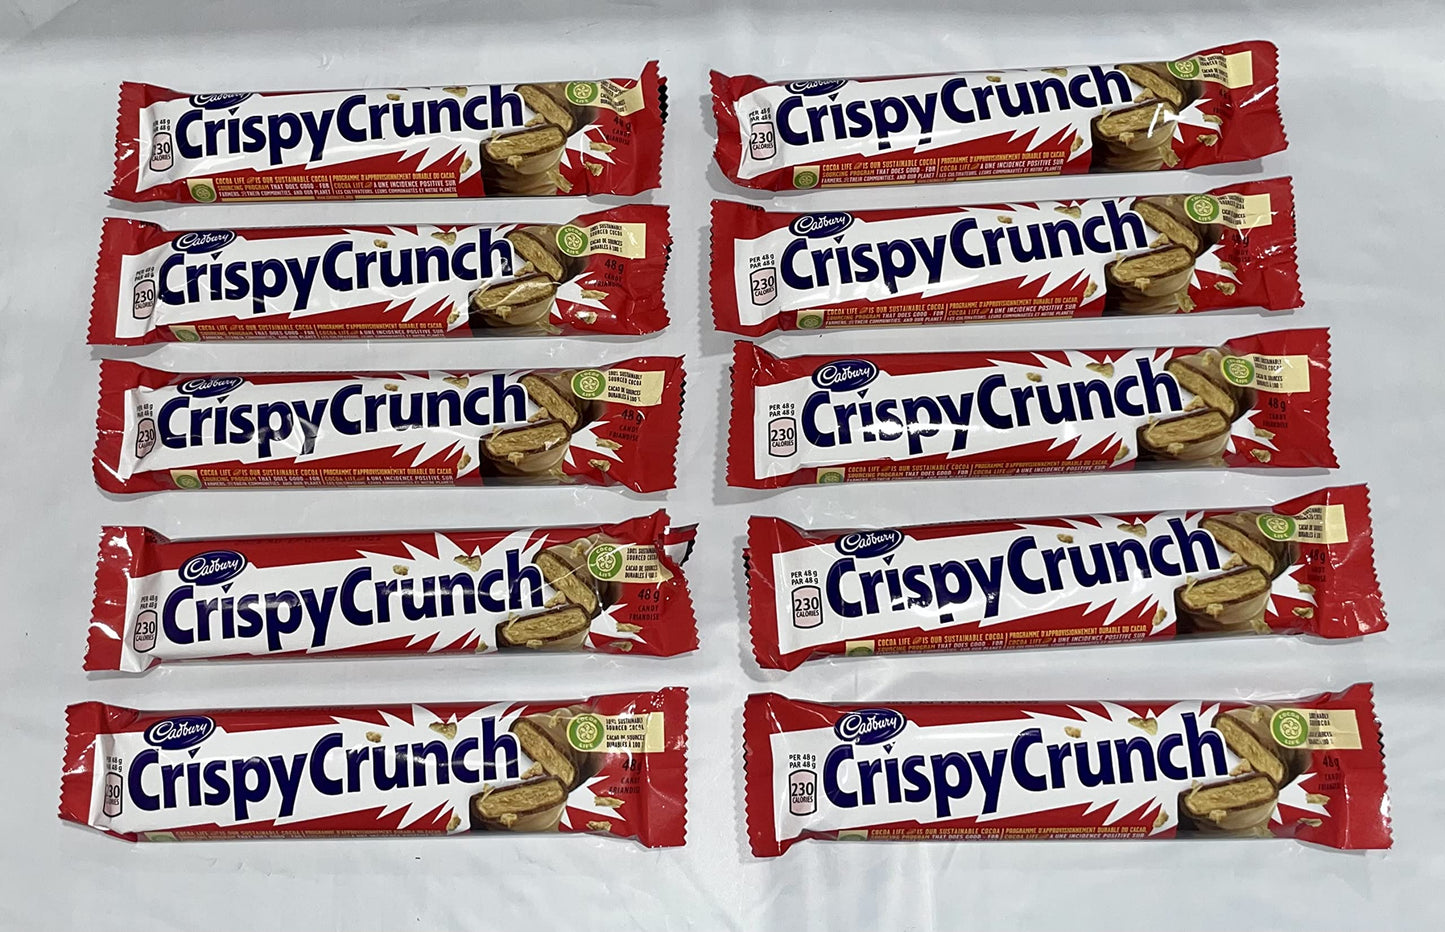 Cadbury Crispy Crunch Chocolate Bars 48g/1.69oz Each (Shipped from Canada)